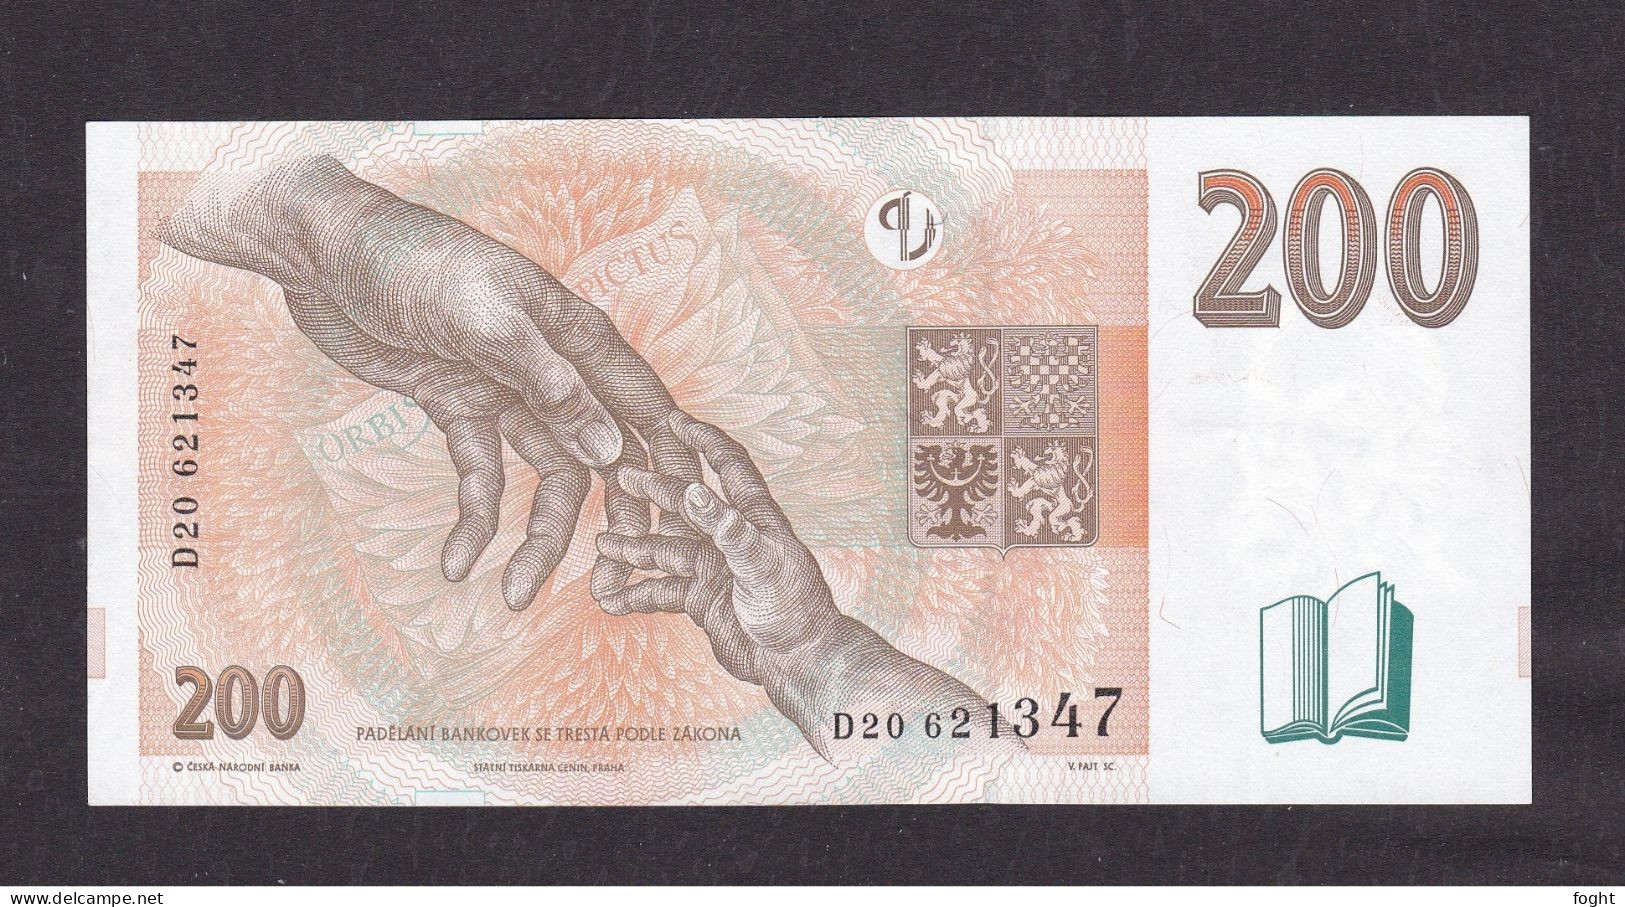 1998 Czech Republic Czech National Bank Banknote 200 Korun,P#19B - República Checa